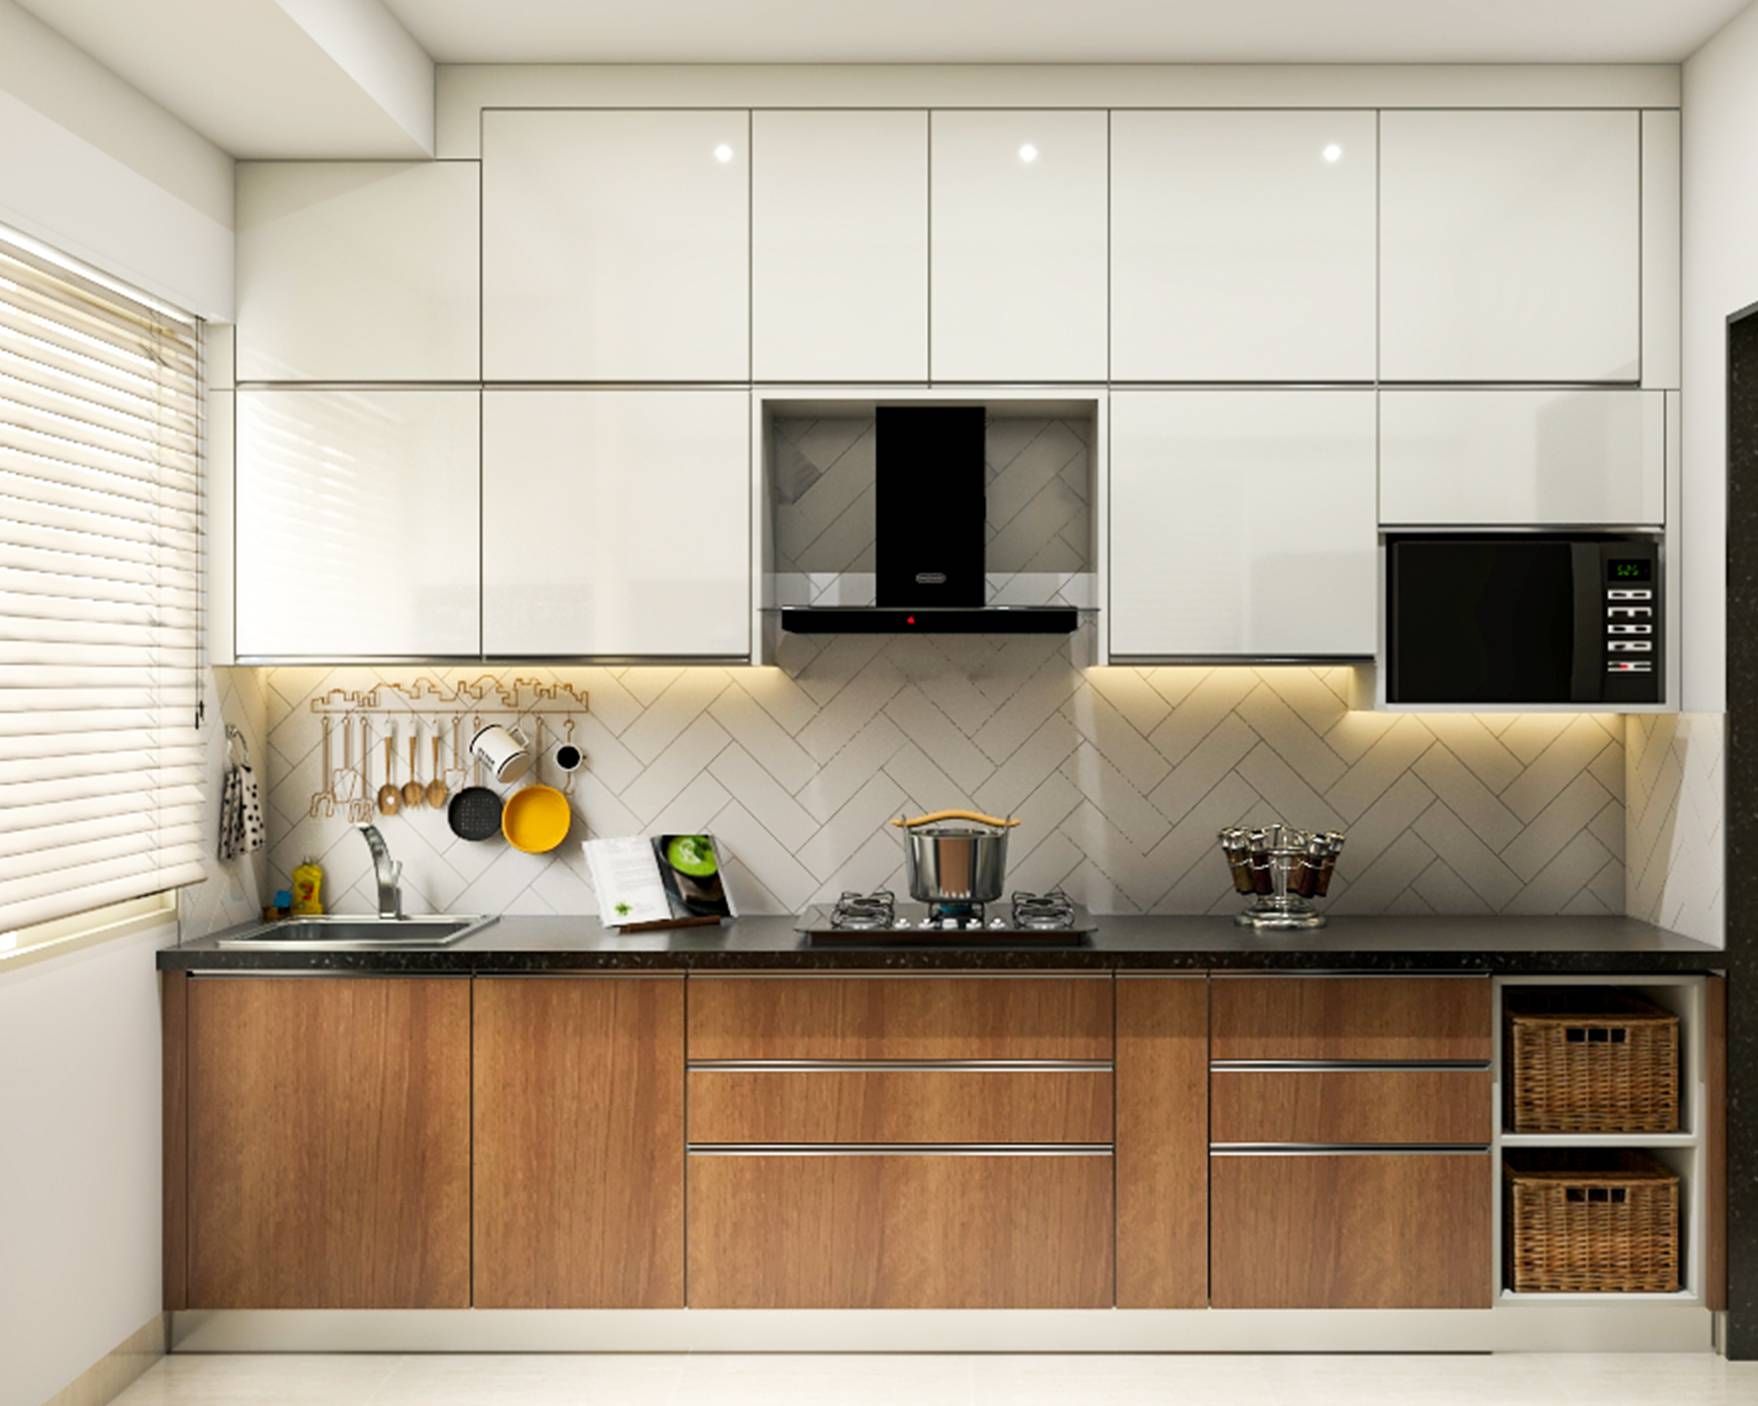 Modular Kitchen Design With Spacious Interiors